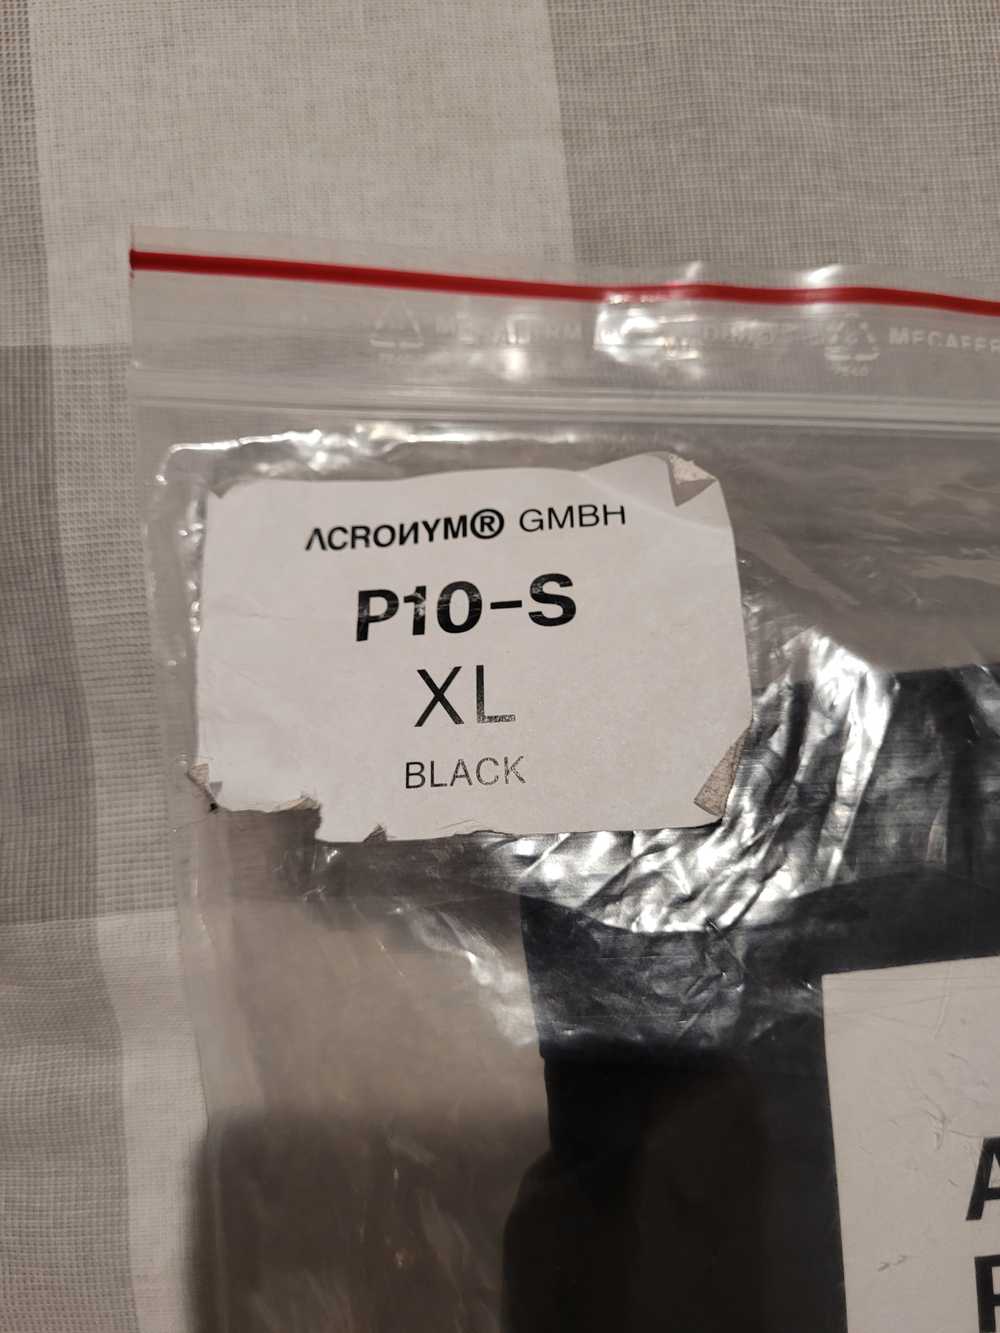 Acronym P10-S SS-16 Black - image 4